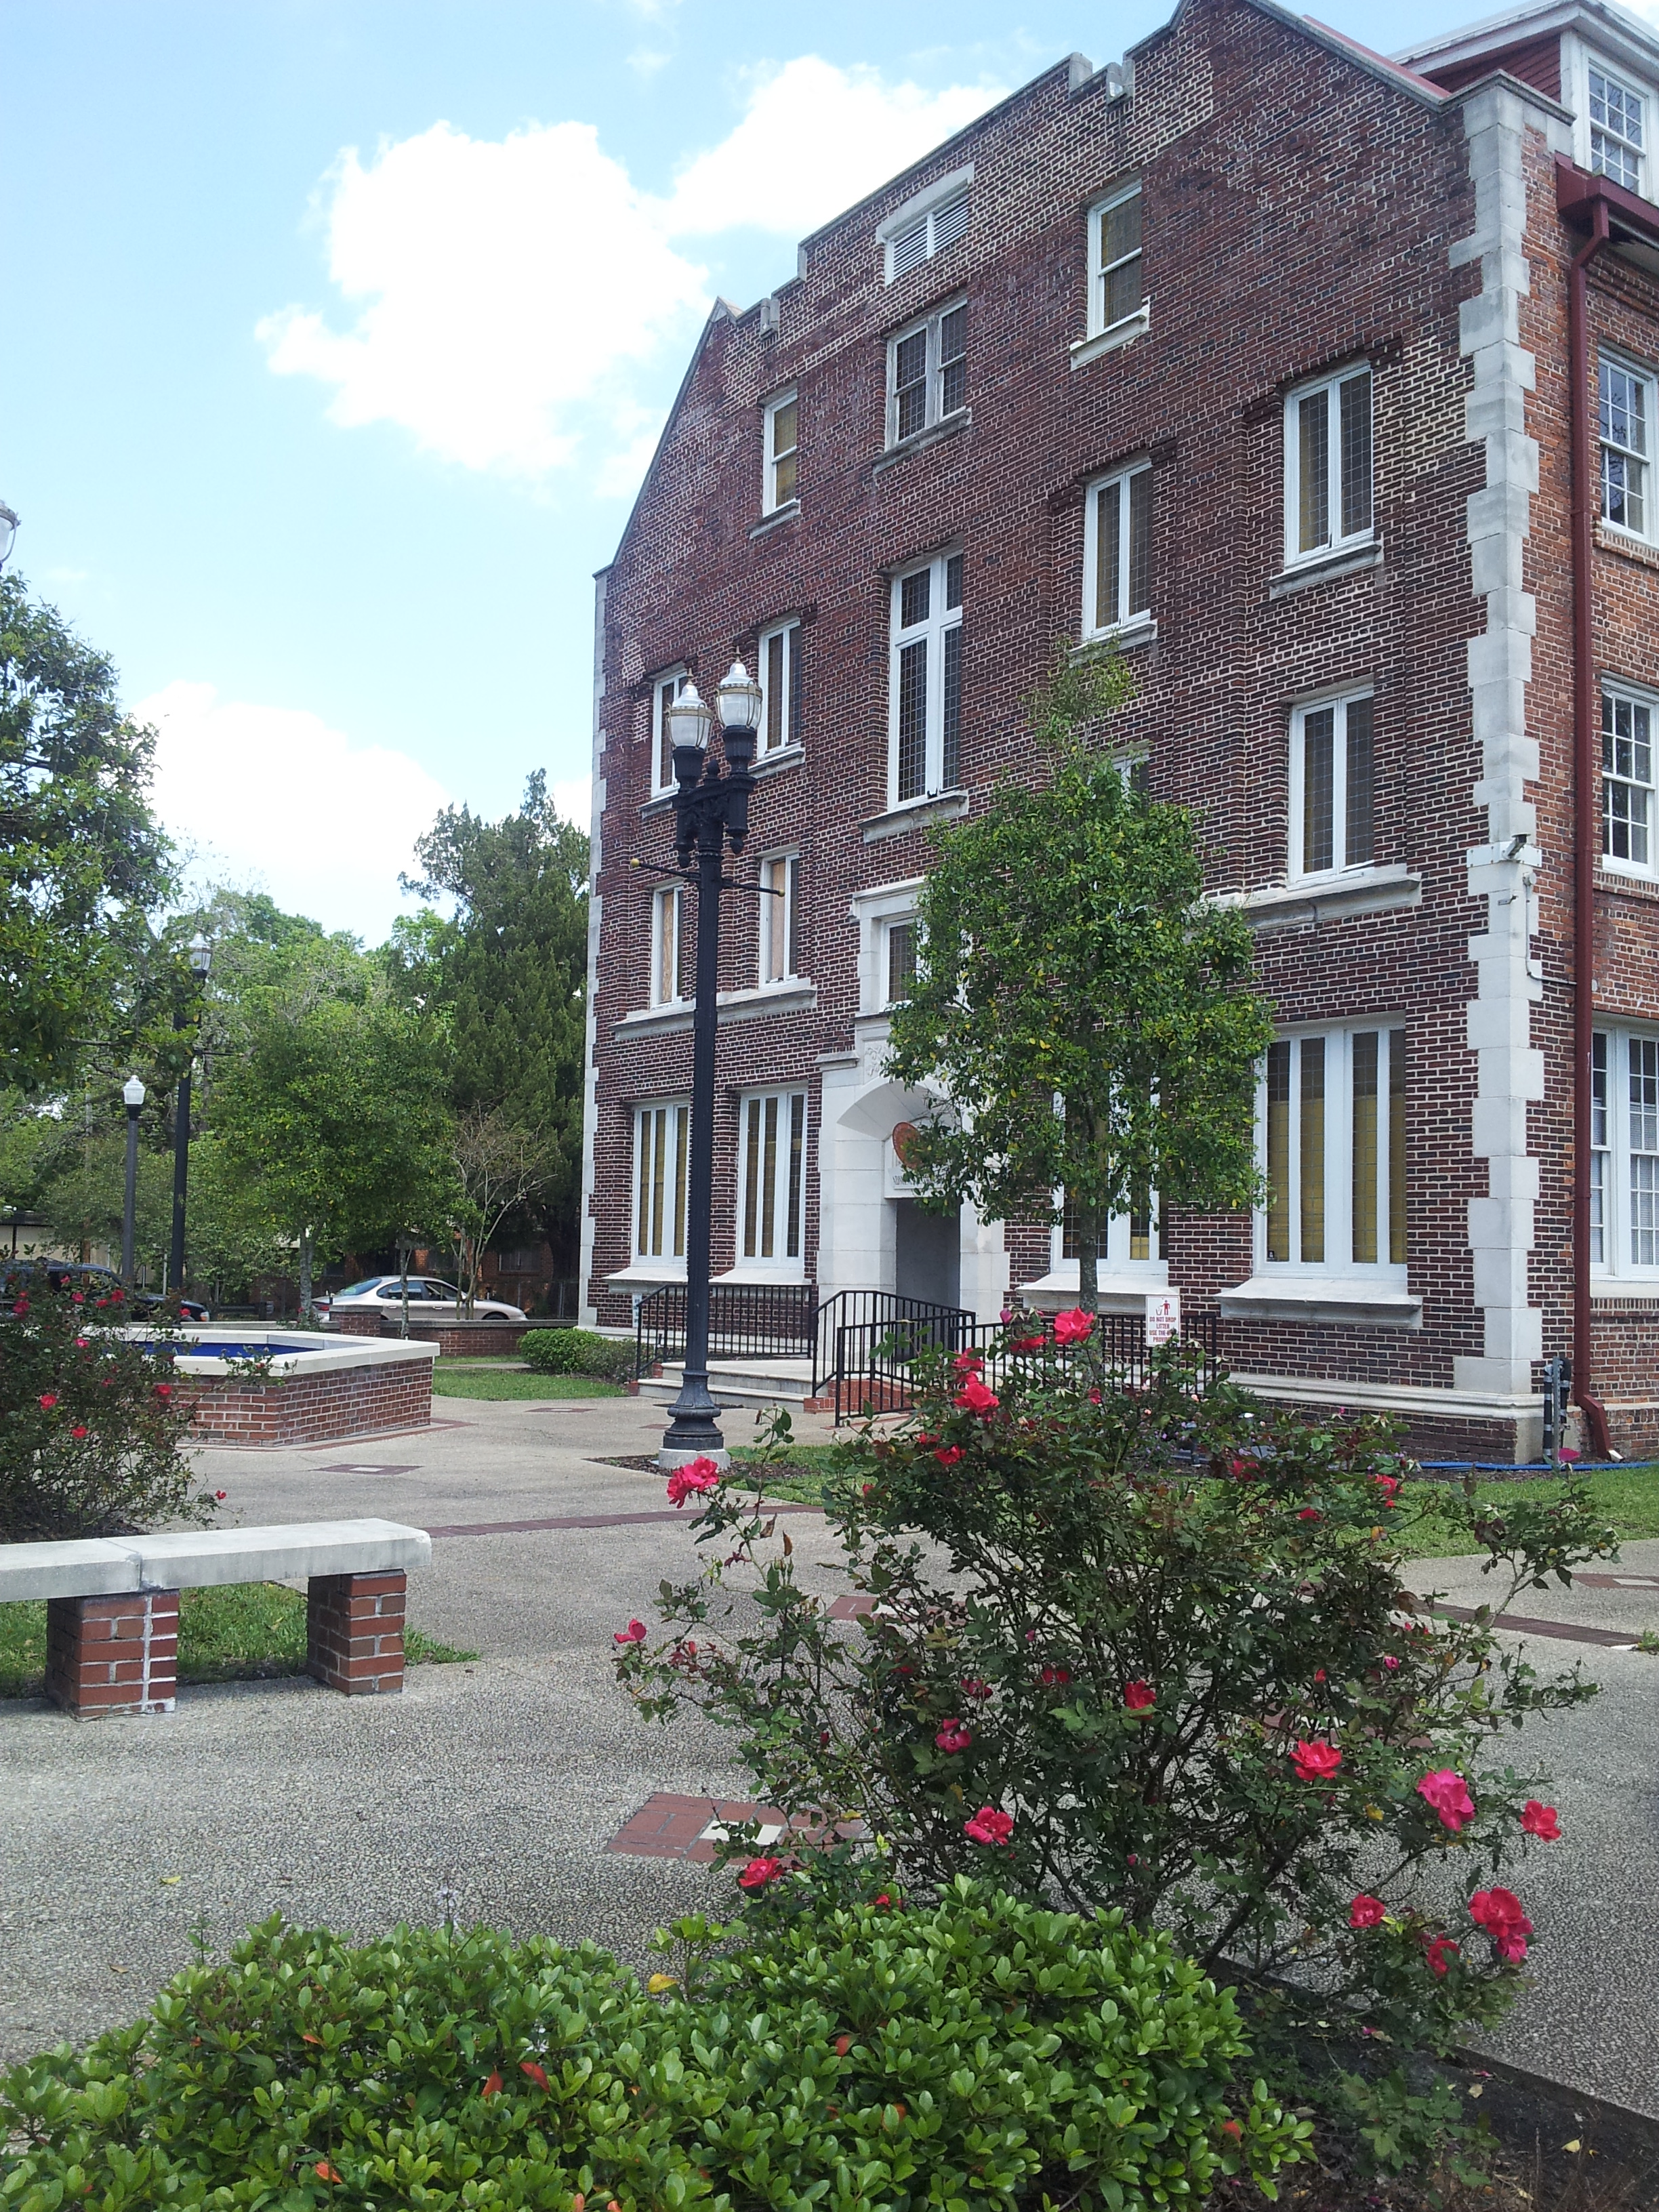 Office of Student Retention, Edward Waters University